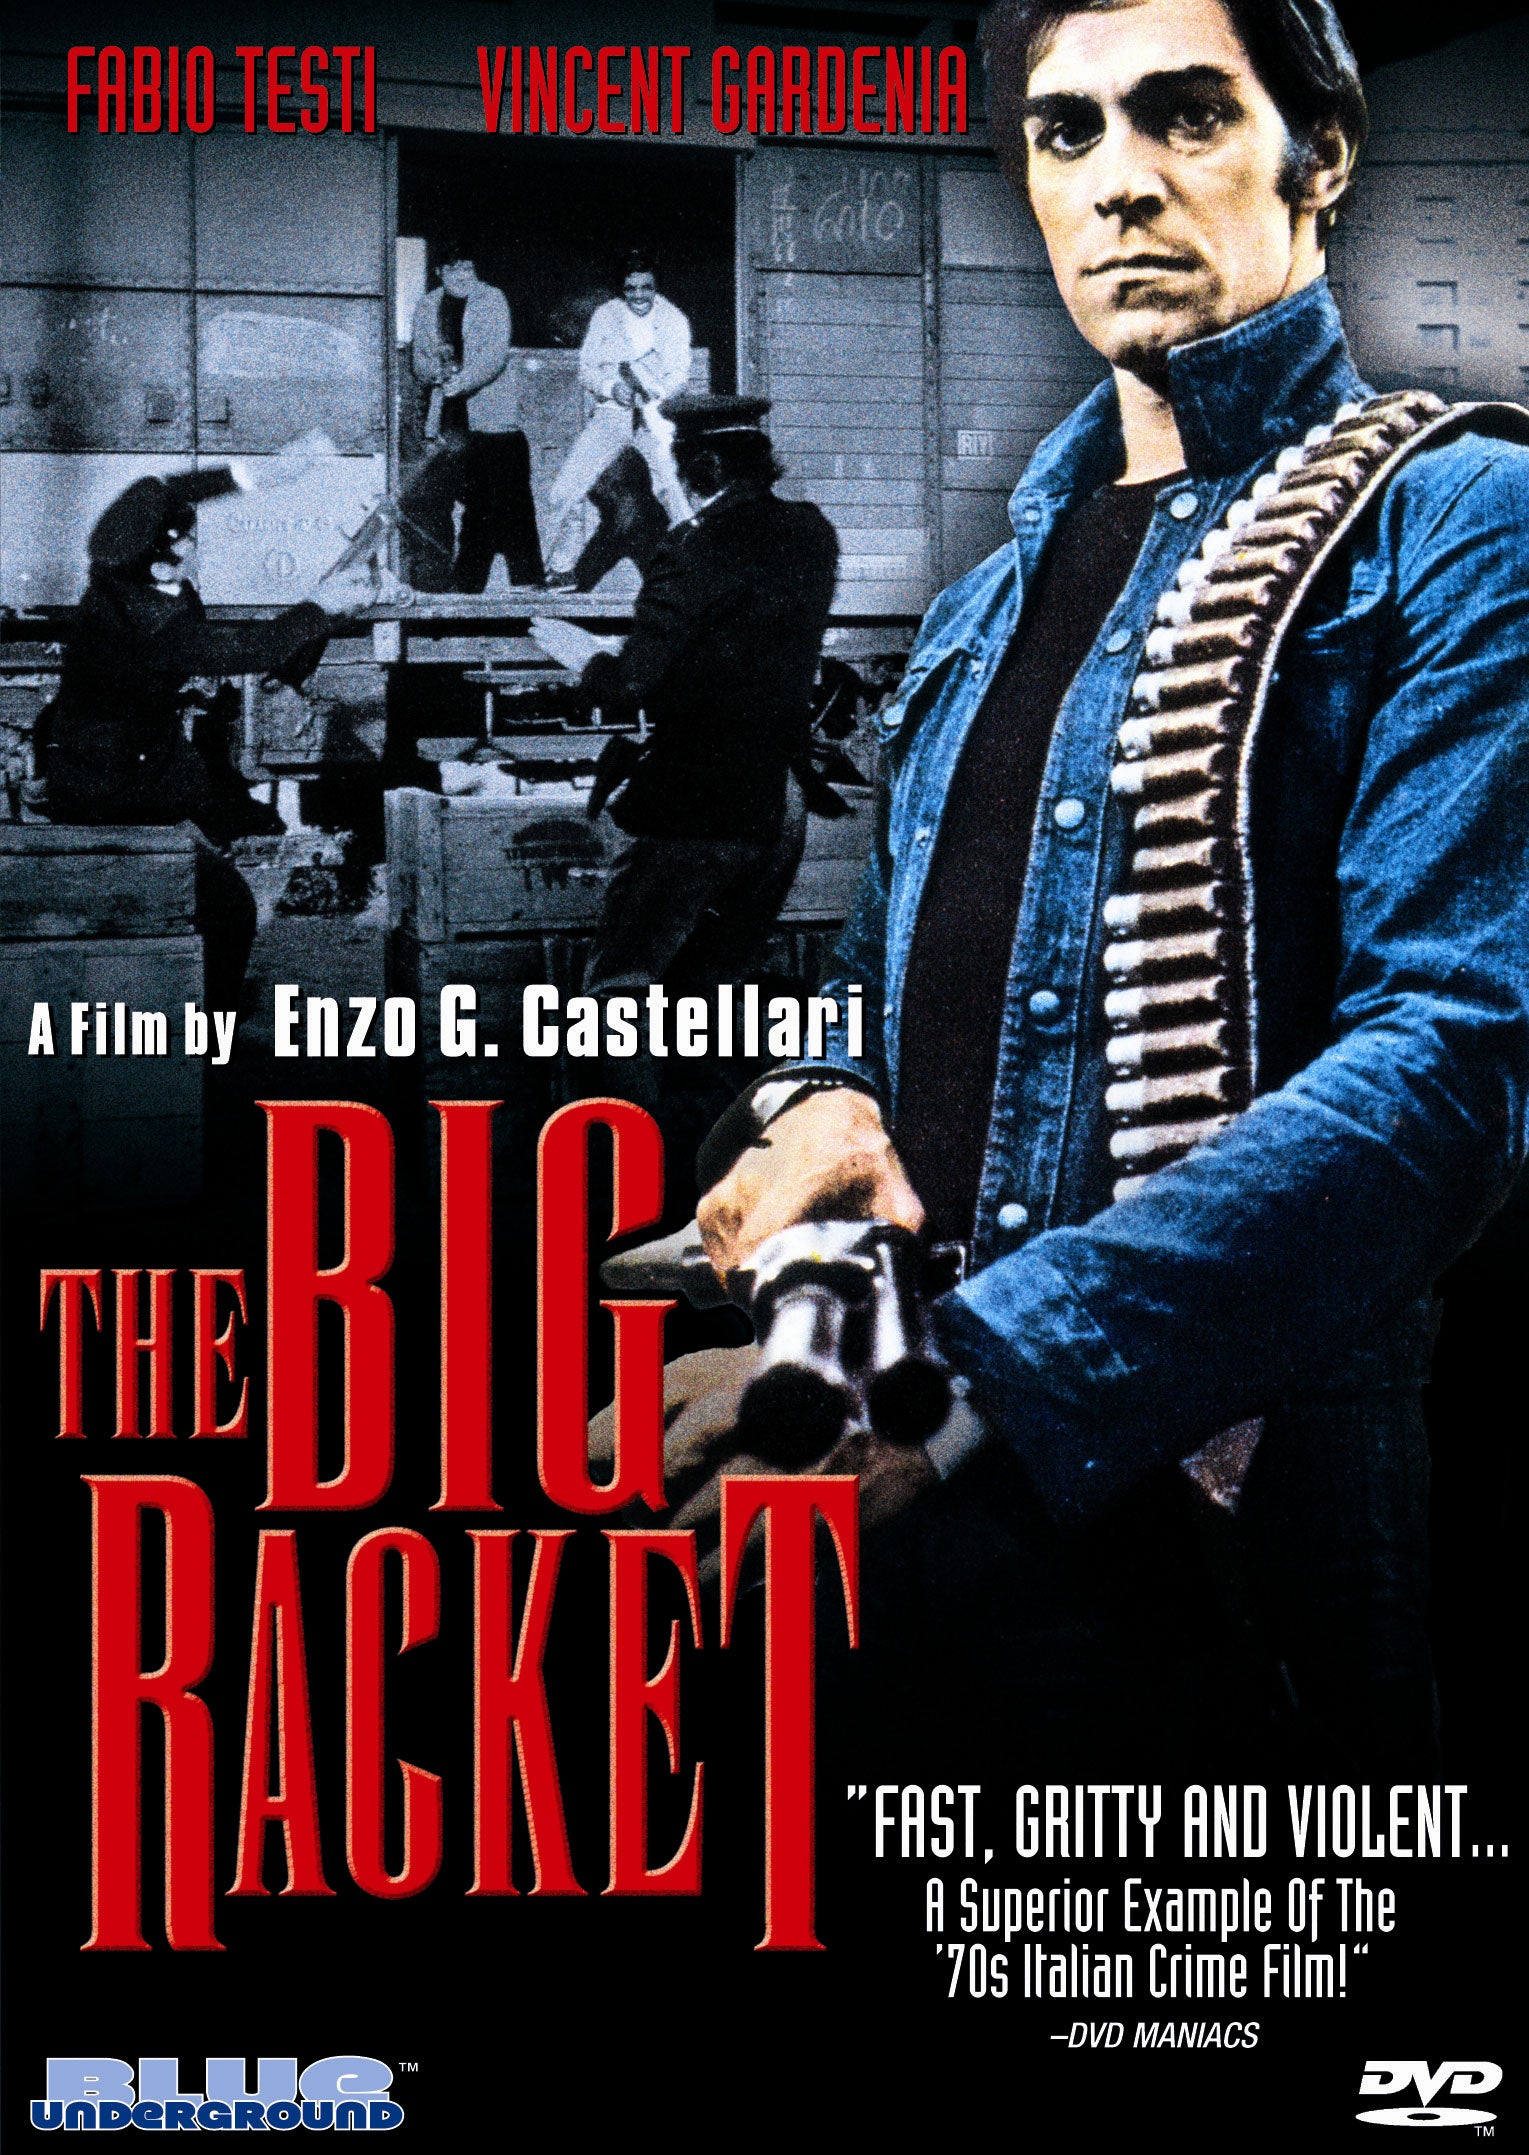 THE BIG RACKET DVD